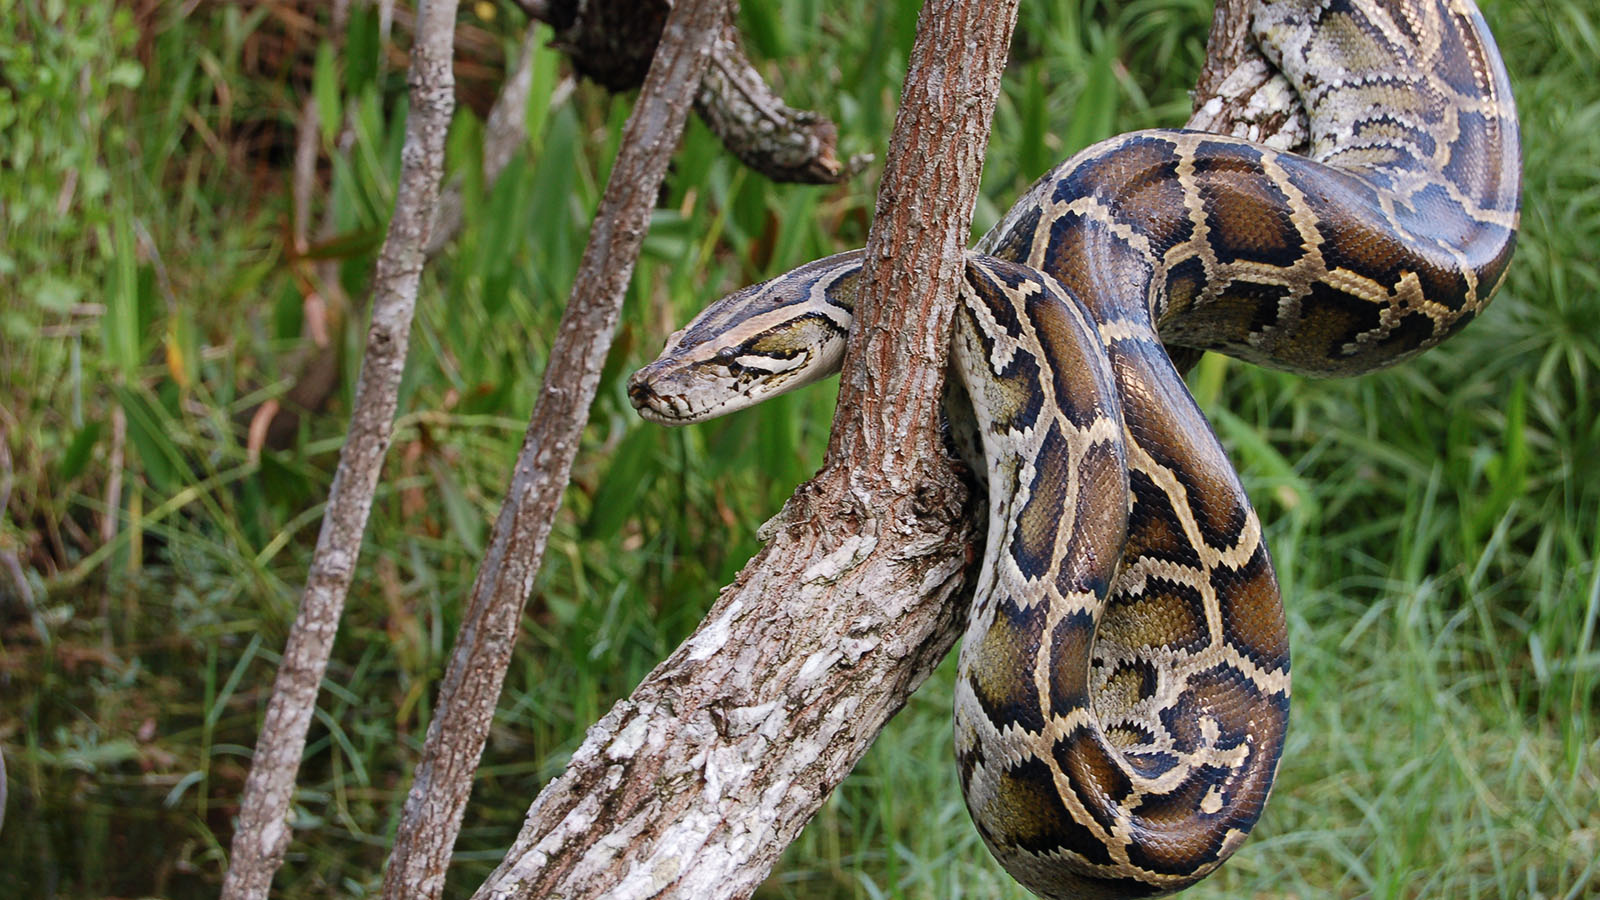 Burmese python (Image by Shutterstock)